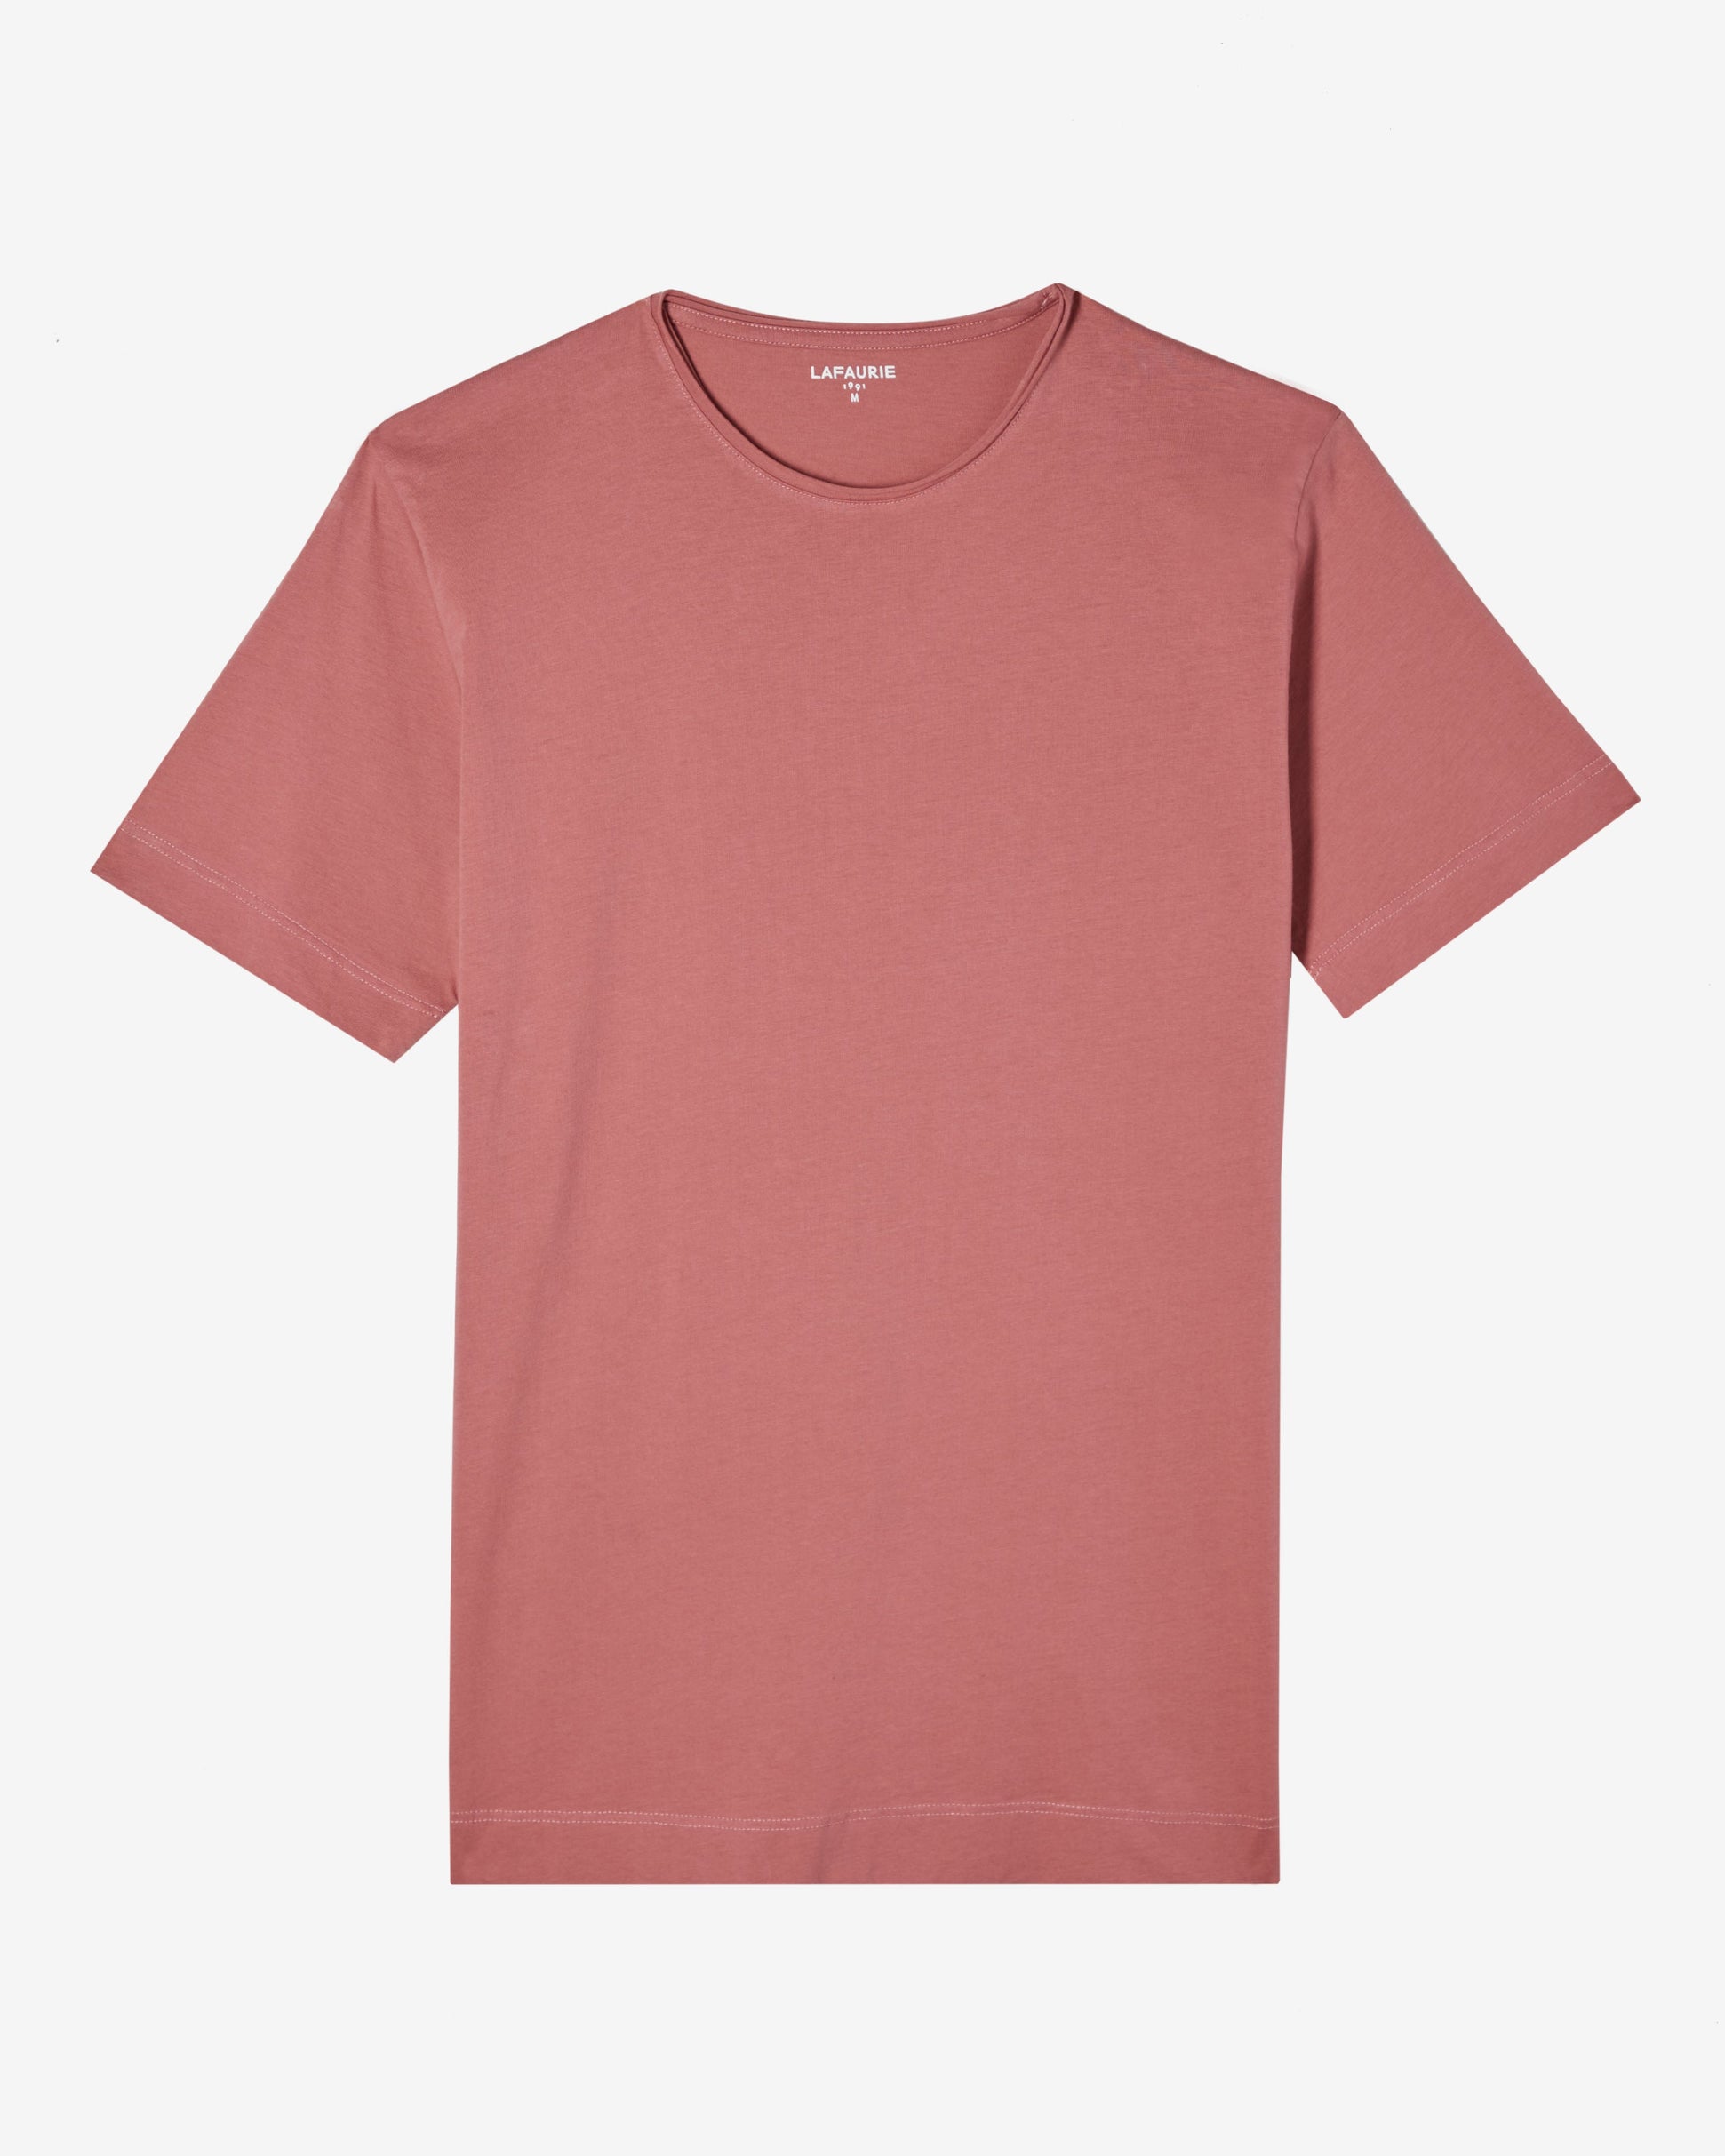 BASILE T-shirt - Watermelon